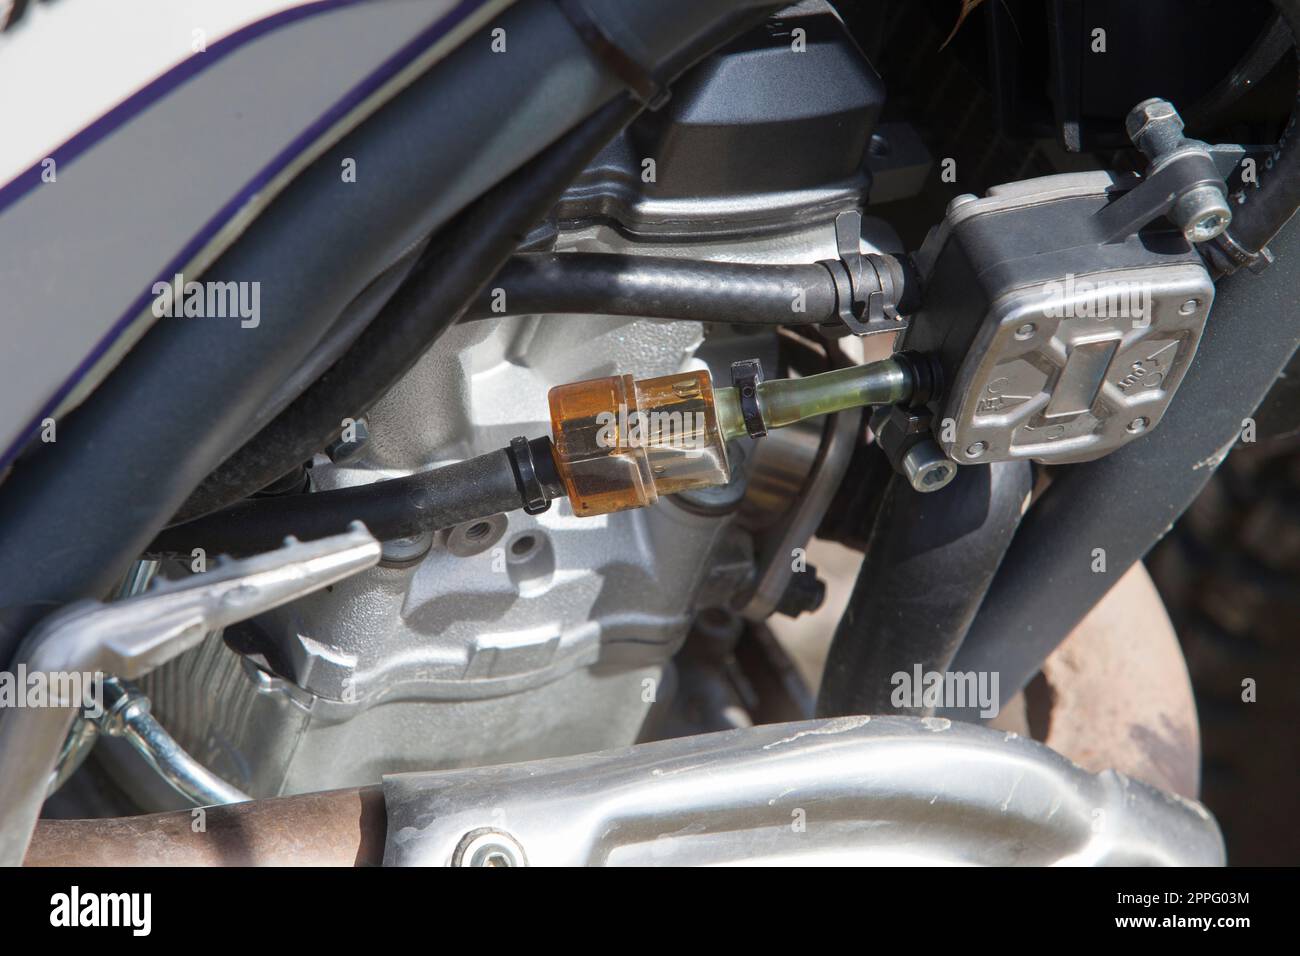 Motorrad trial -Fotos und -Bildmaterial in hoher Auflösung – Alamy